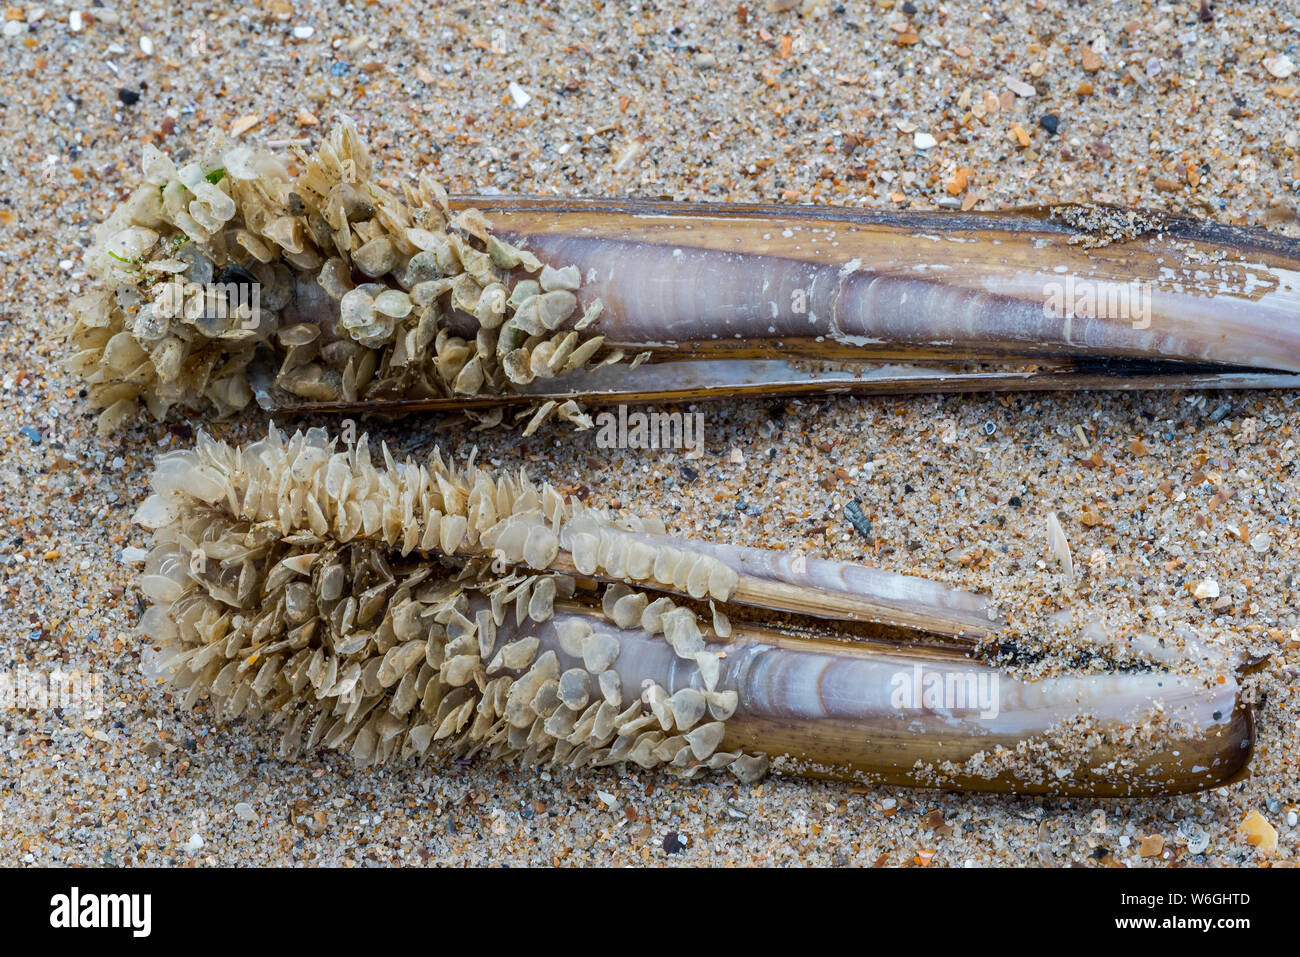 Egg cases / eggs of netted dog whelk (Tritia reticulata / Nassarius reticulatus / Hinia reticulata), marine gastropod mollusc, washed ashore on beach Stock Photo